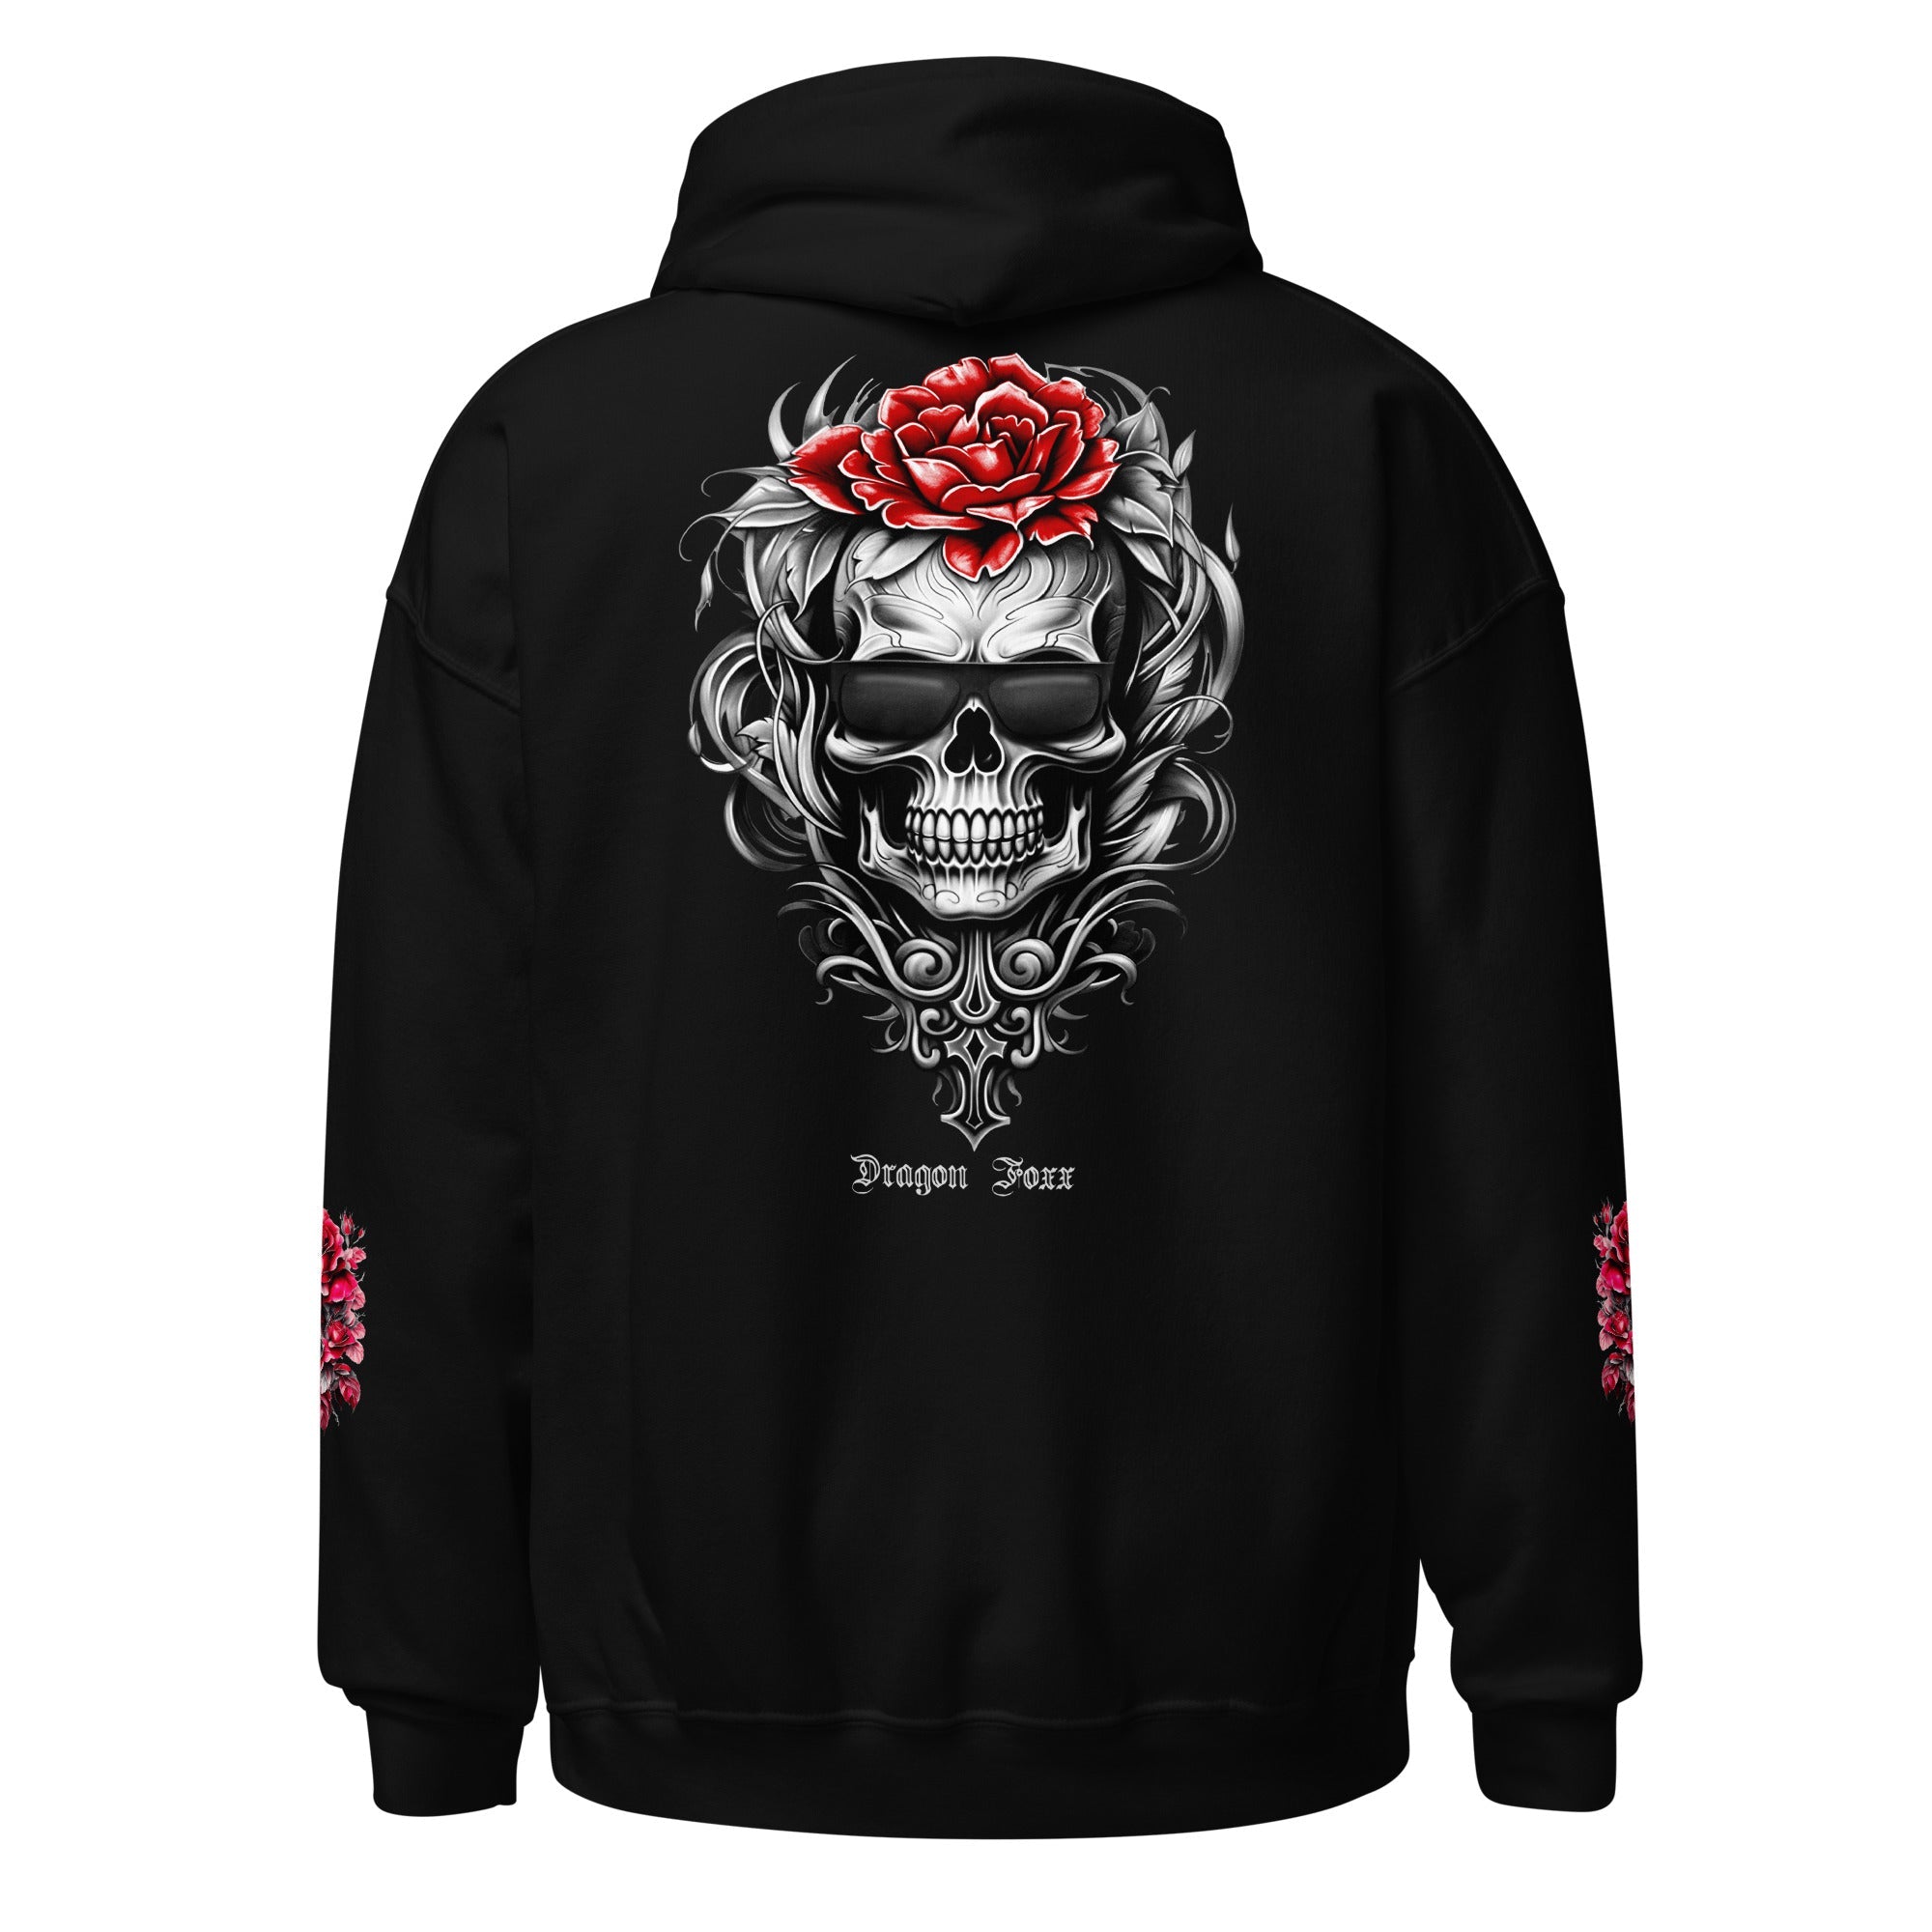 Red Roses - Women's Graphic Hoodie - Women's Graphic Hoodie - DRAGON FOXX™ - Red Roses - Women's Graphic Hoodie - 6881420_5530 - Black - S - Black Hoodie - Dragon Foxx™ - Graphic Hoodie